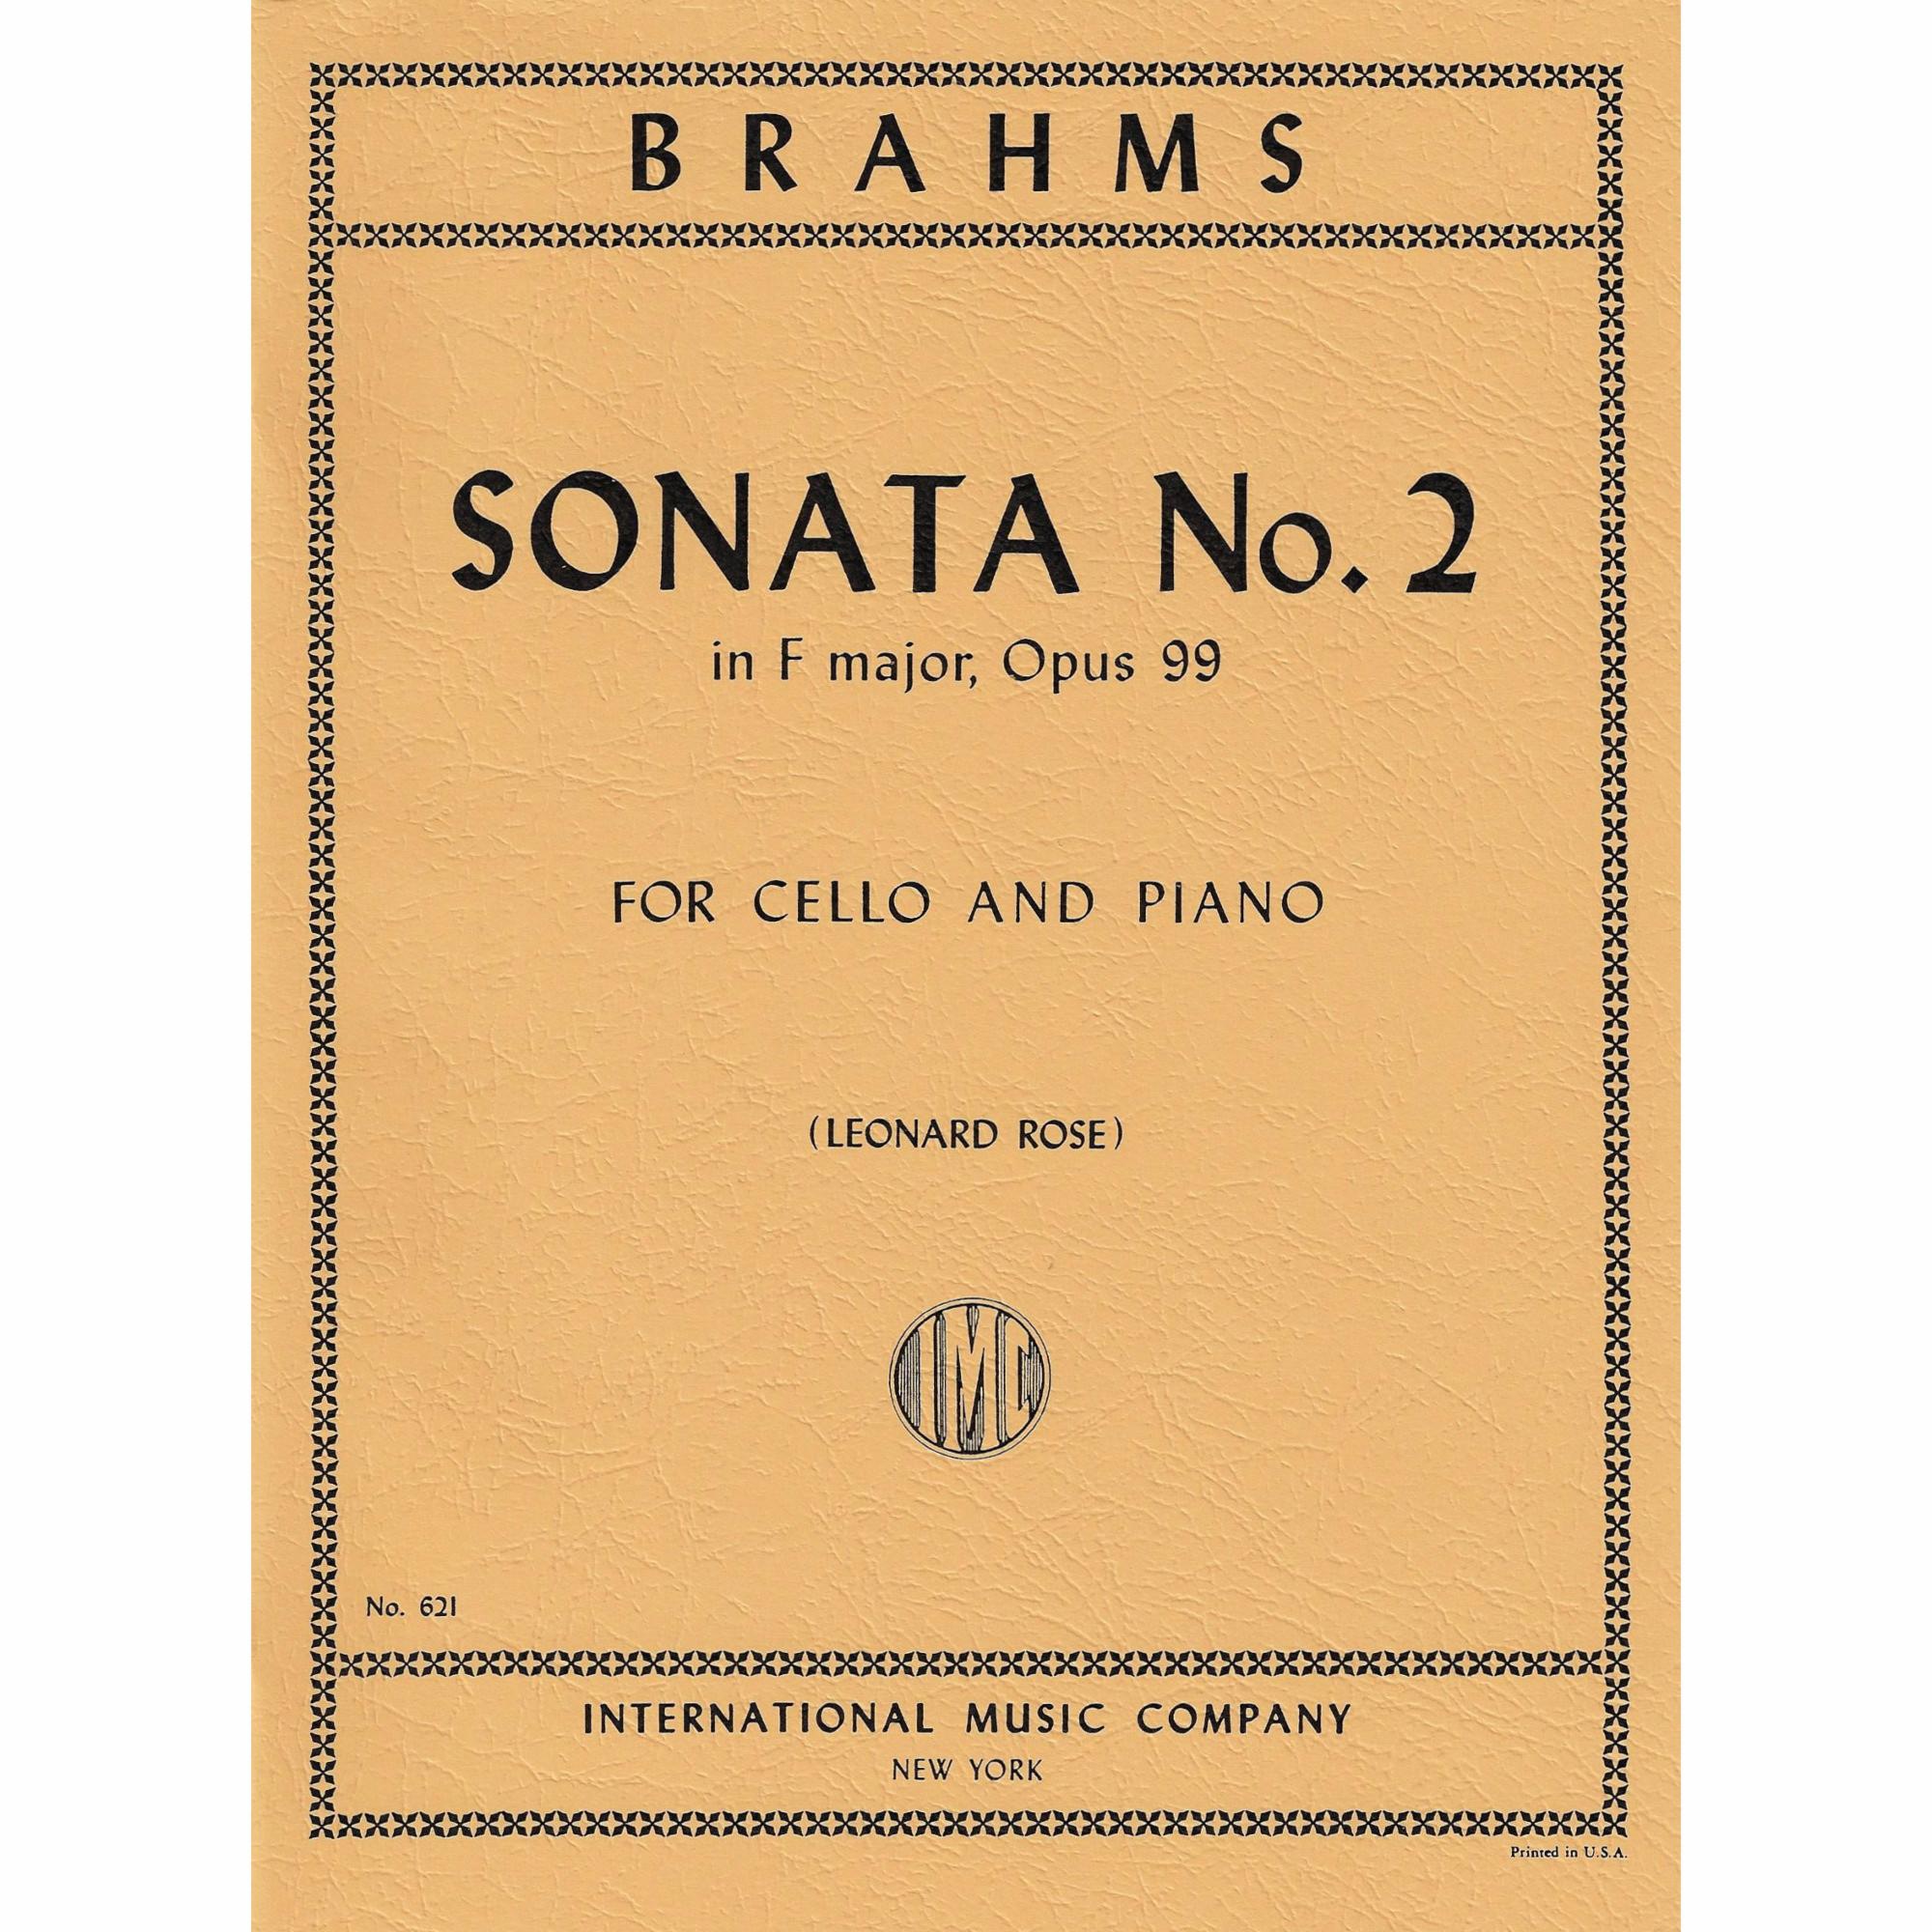 Cello Sonata No. 2 in F Major, Op. 99